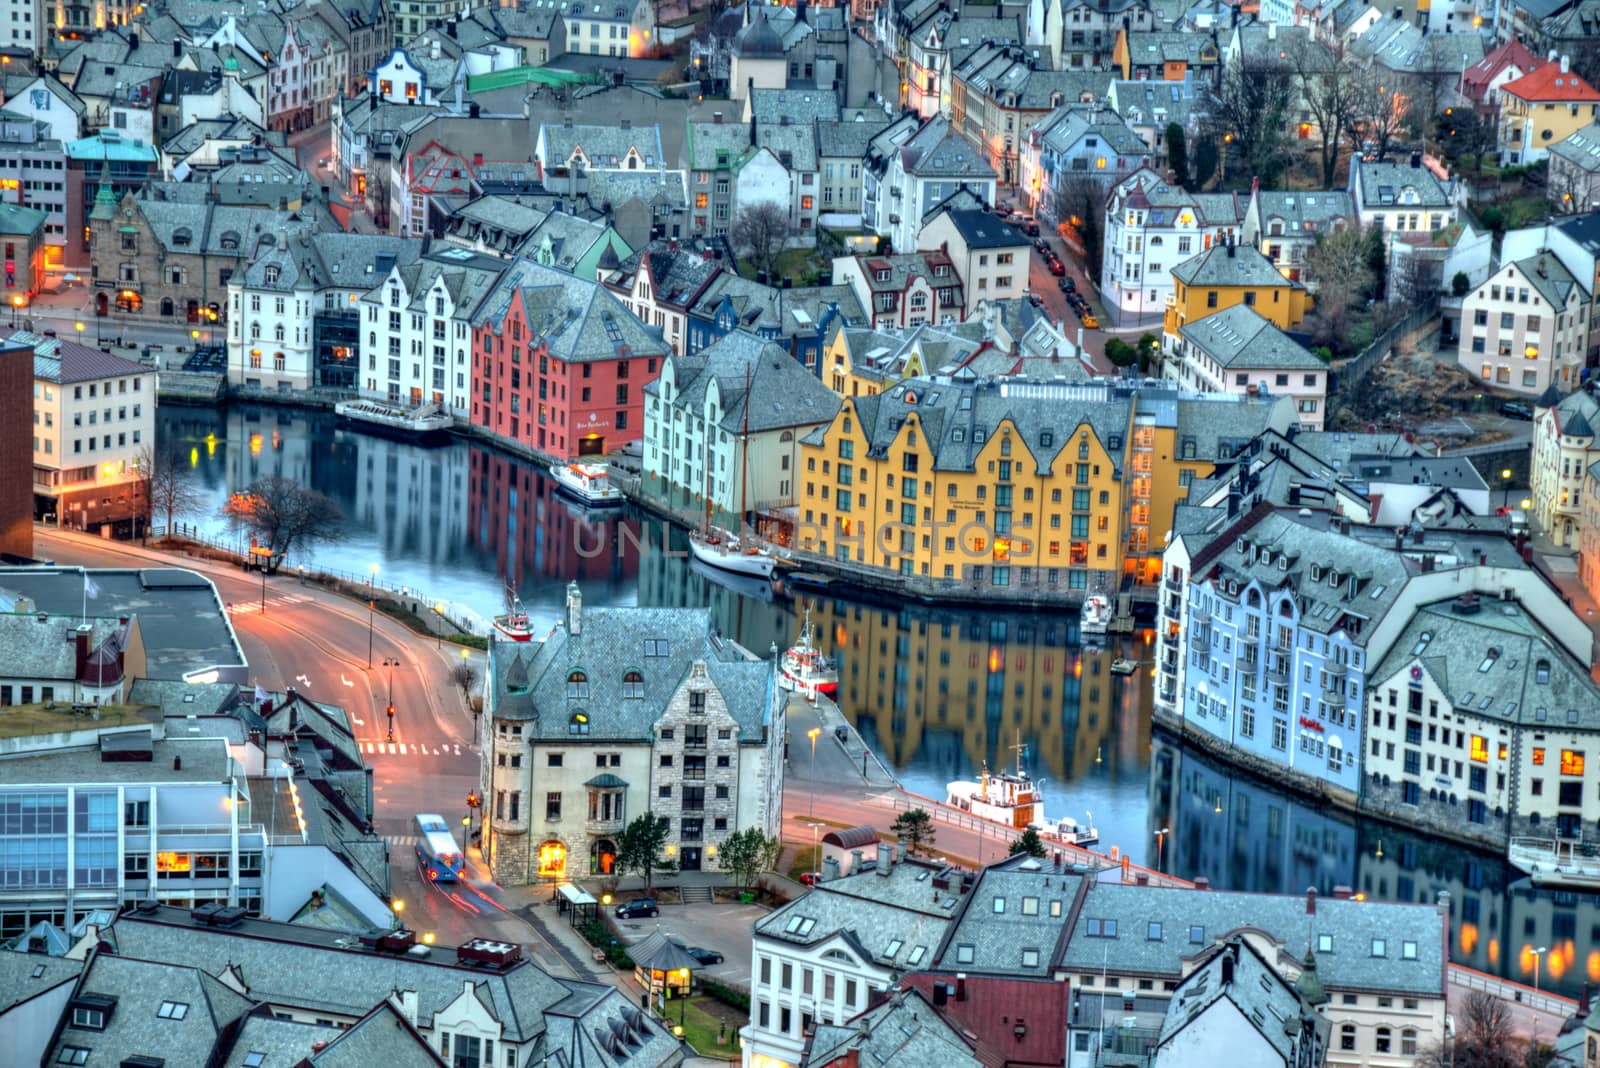 City of Alesund in Norway